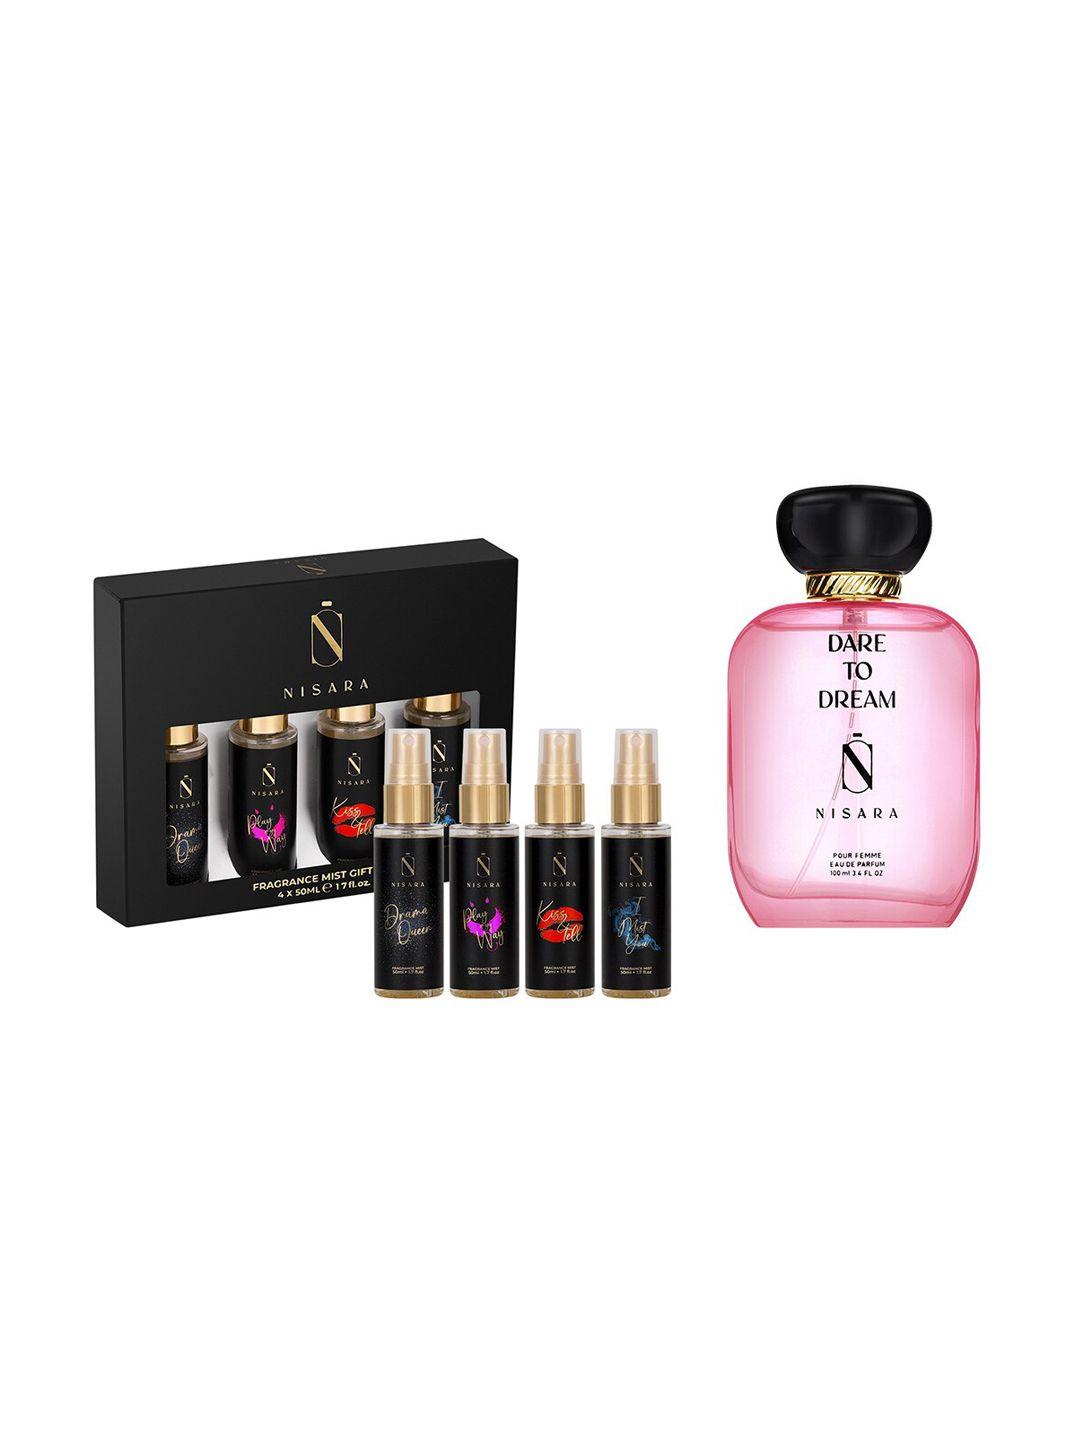 nisara dare to dream perfume & fragrance body mist gift set